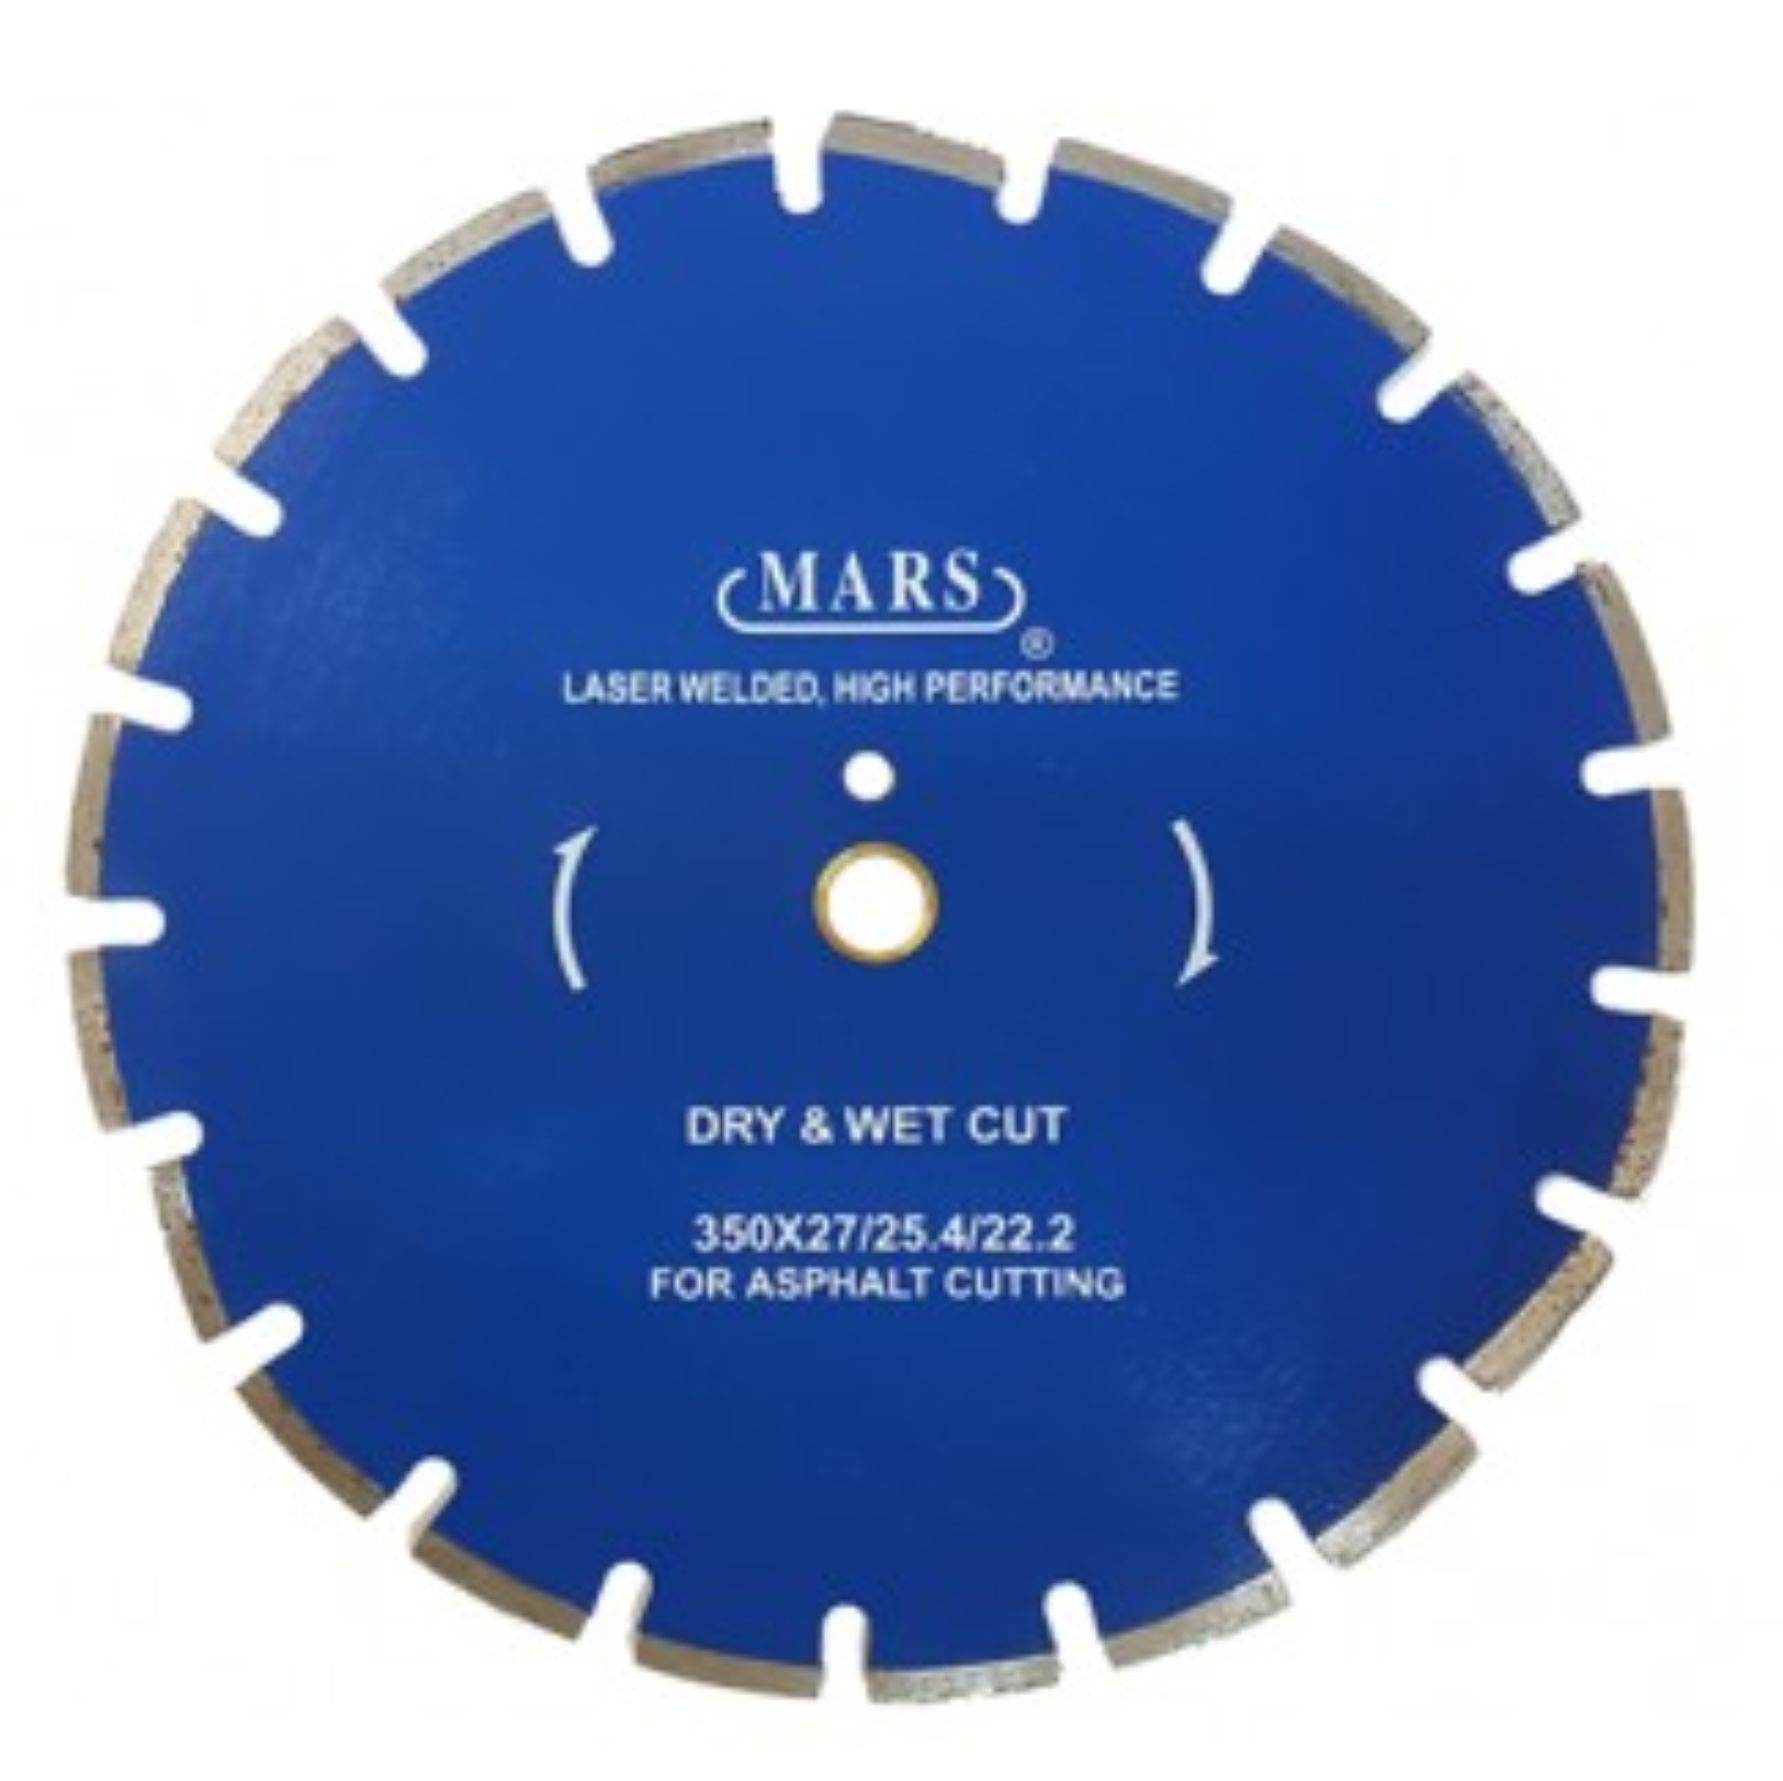 Mars Diamond Cutting Wheel For Asphalt - DRY & WET